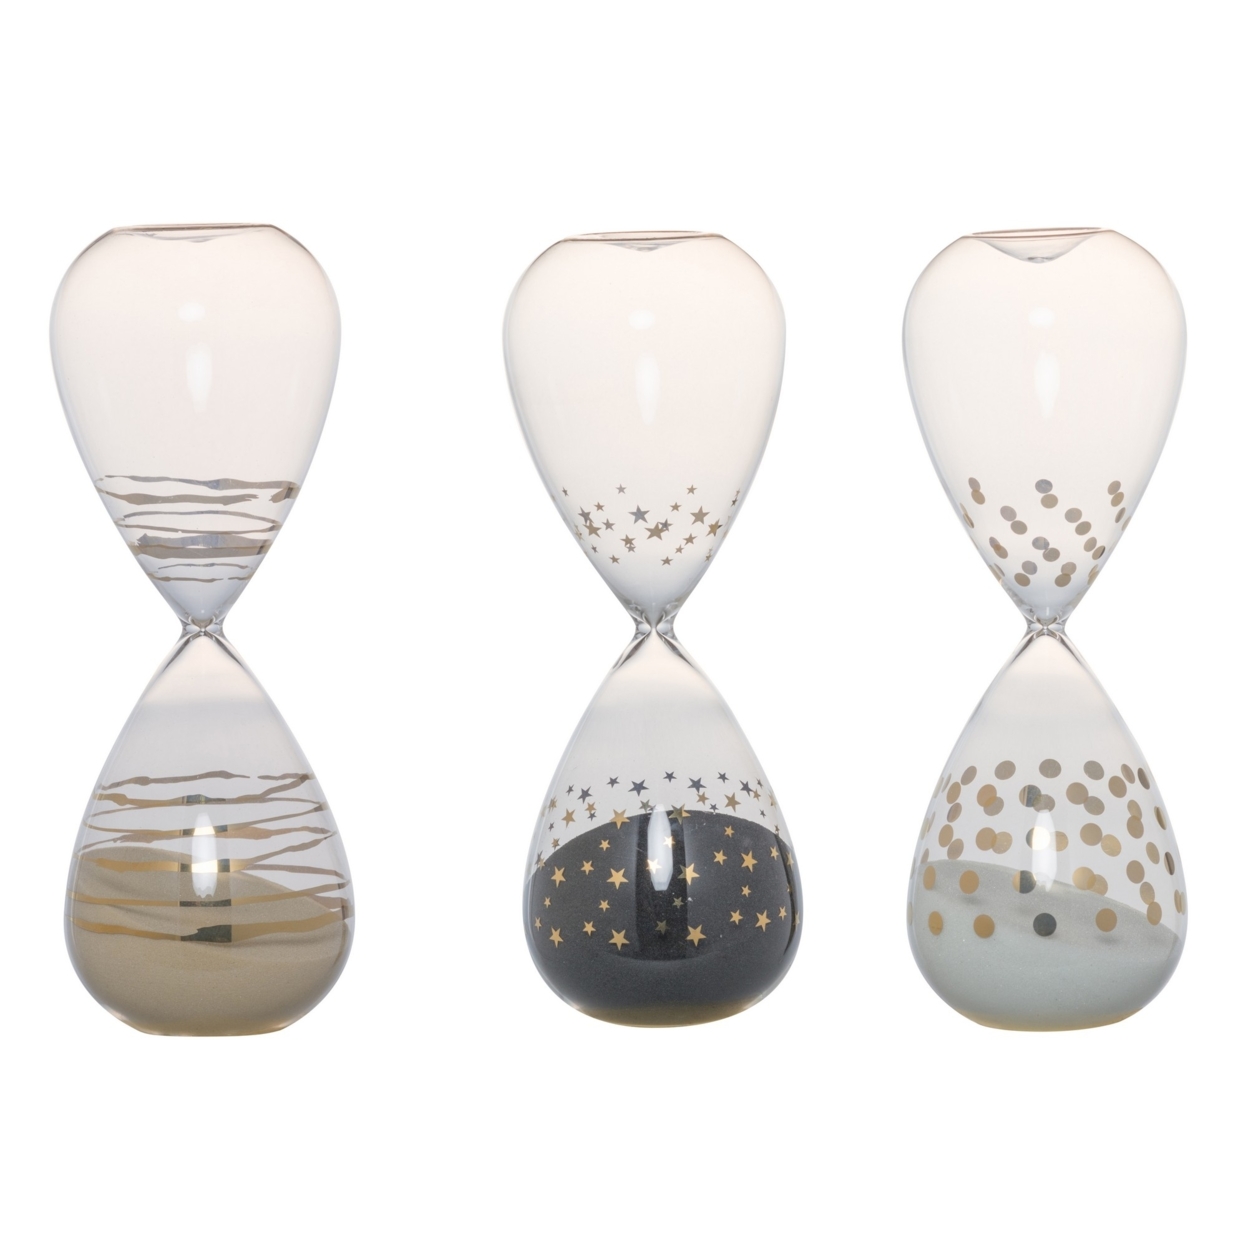 Doug Set Of 3 Decorative 60 Minute Hourglass Accent Decor, Colored Sand- Saltoro Sherpi